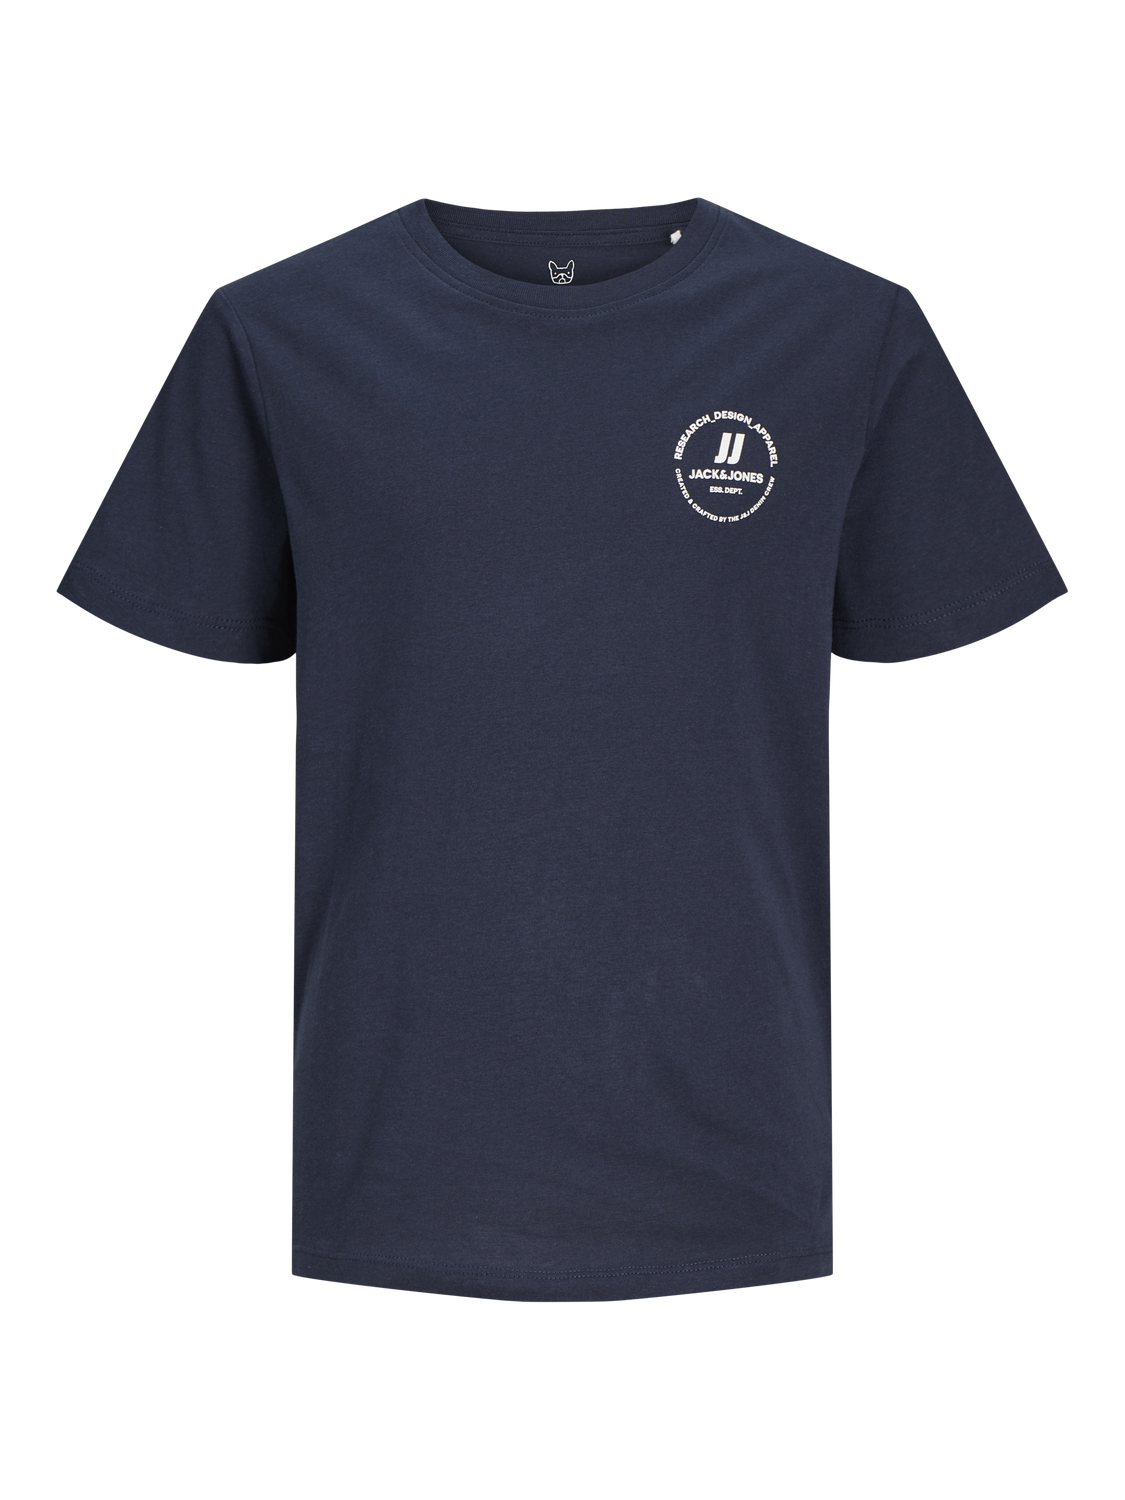 Jack & Jones Printed T-shirt Mini -Navy Blazer - 12259964